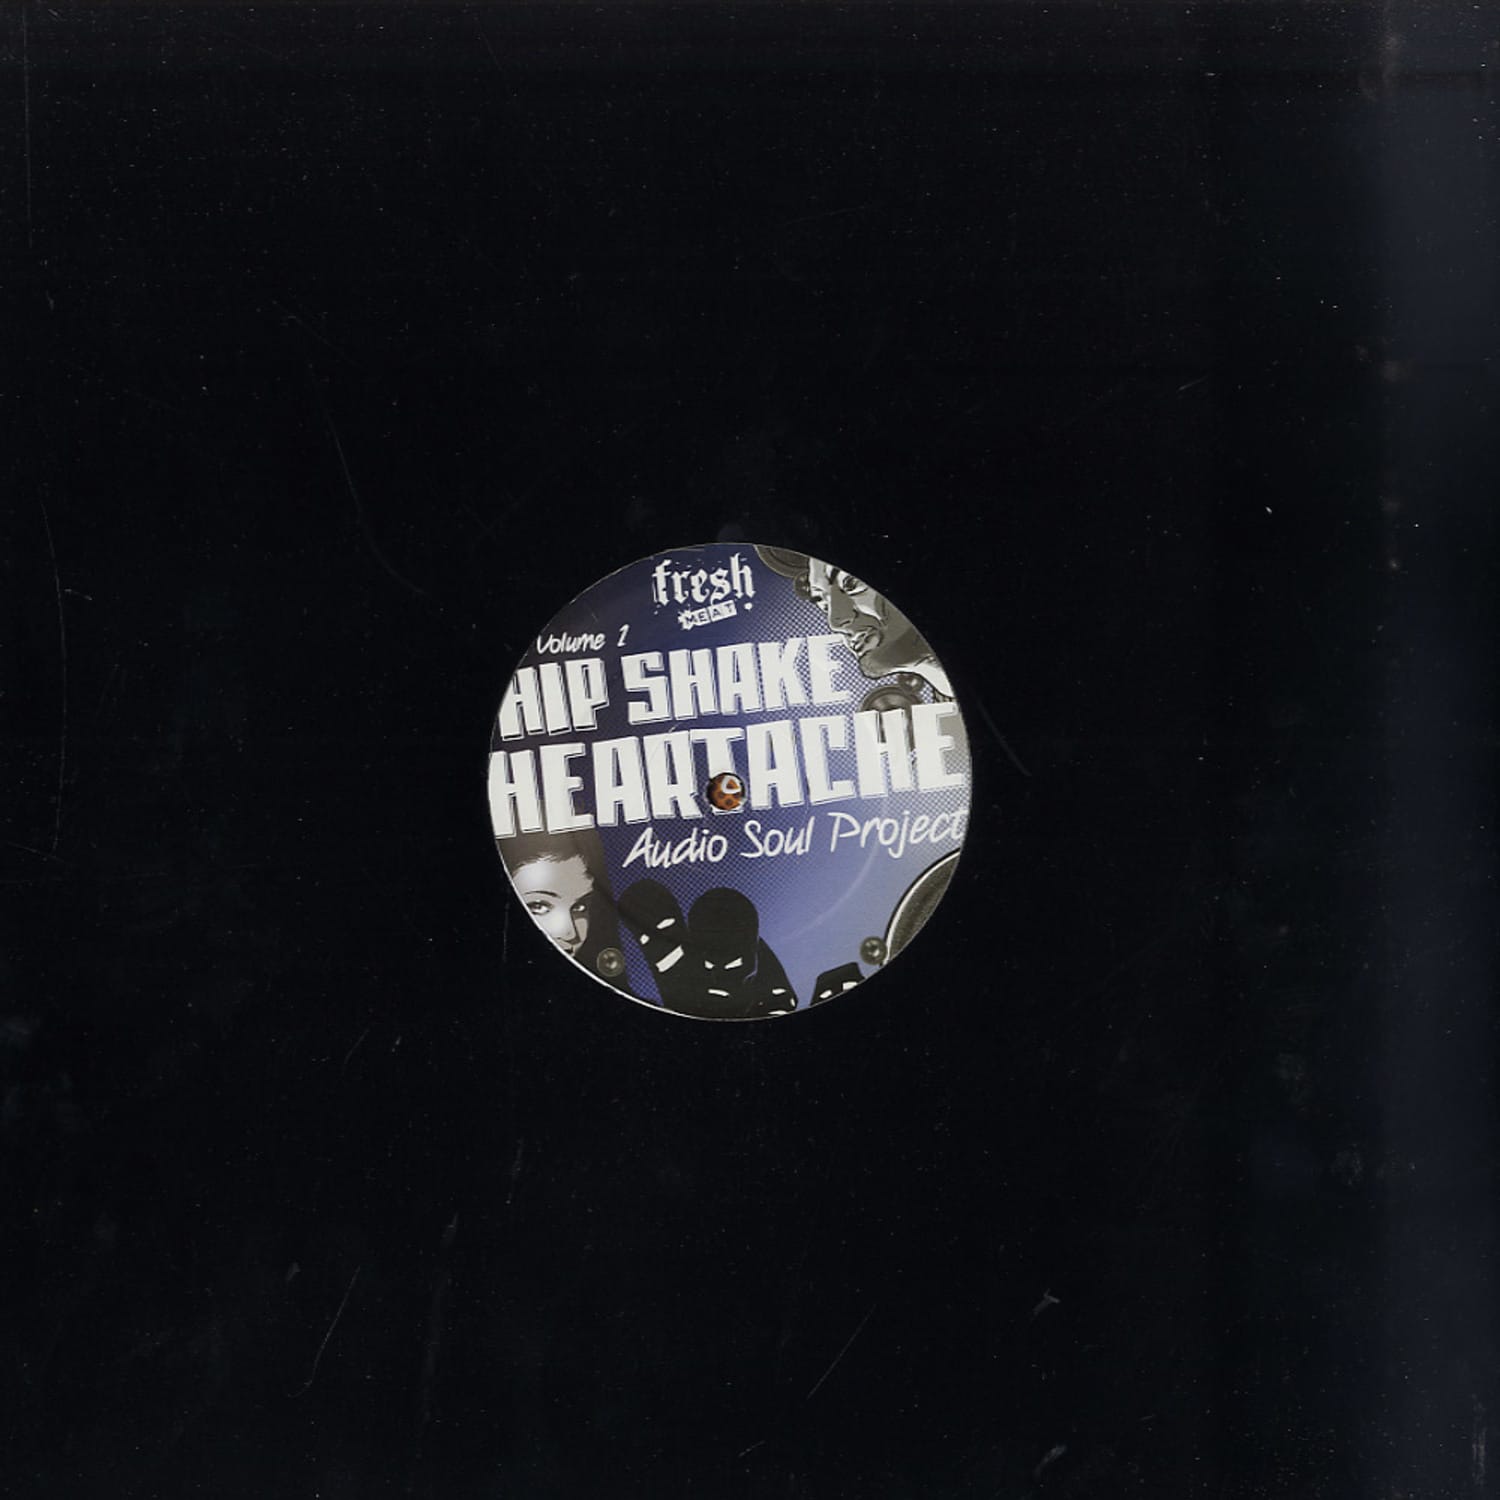 Audio Soul Project - HIP SHAKE HEARTACHE VOLUME 1